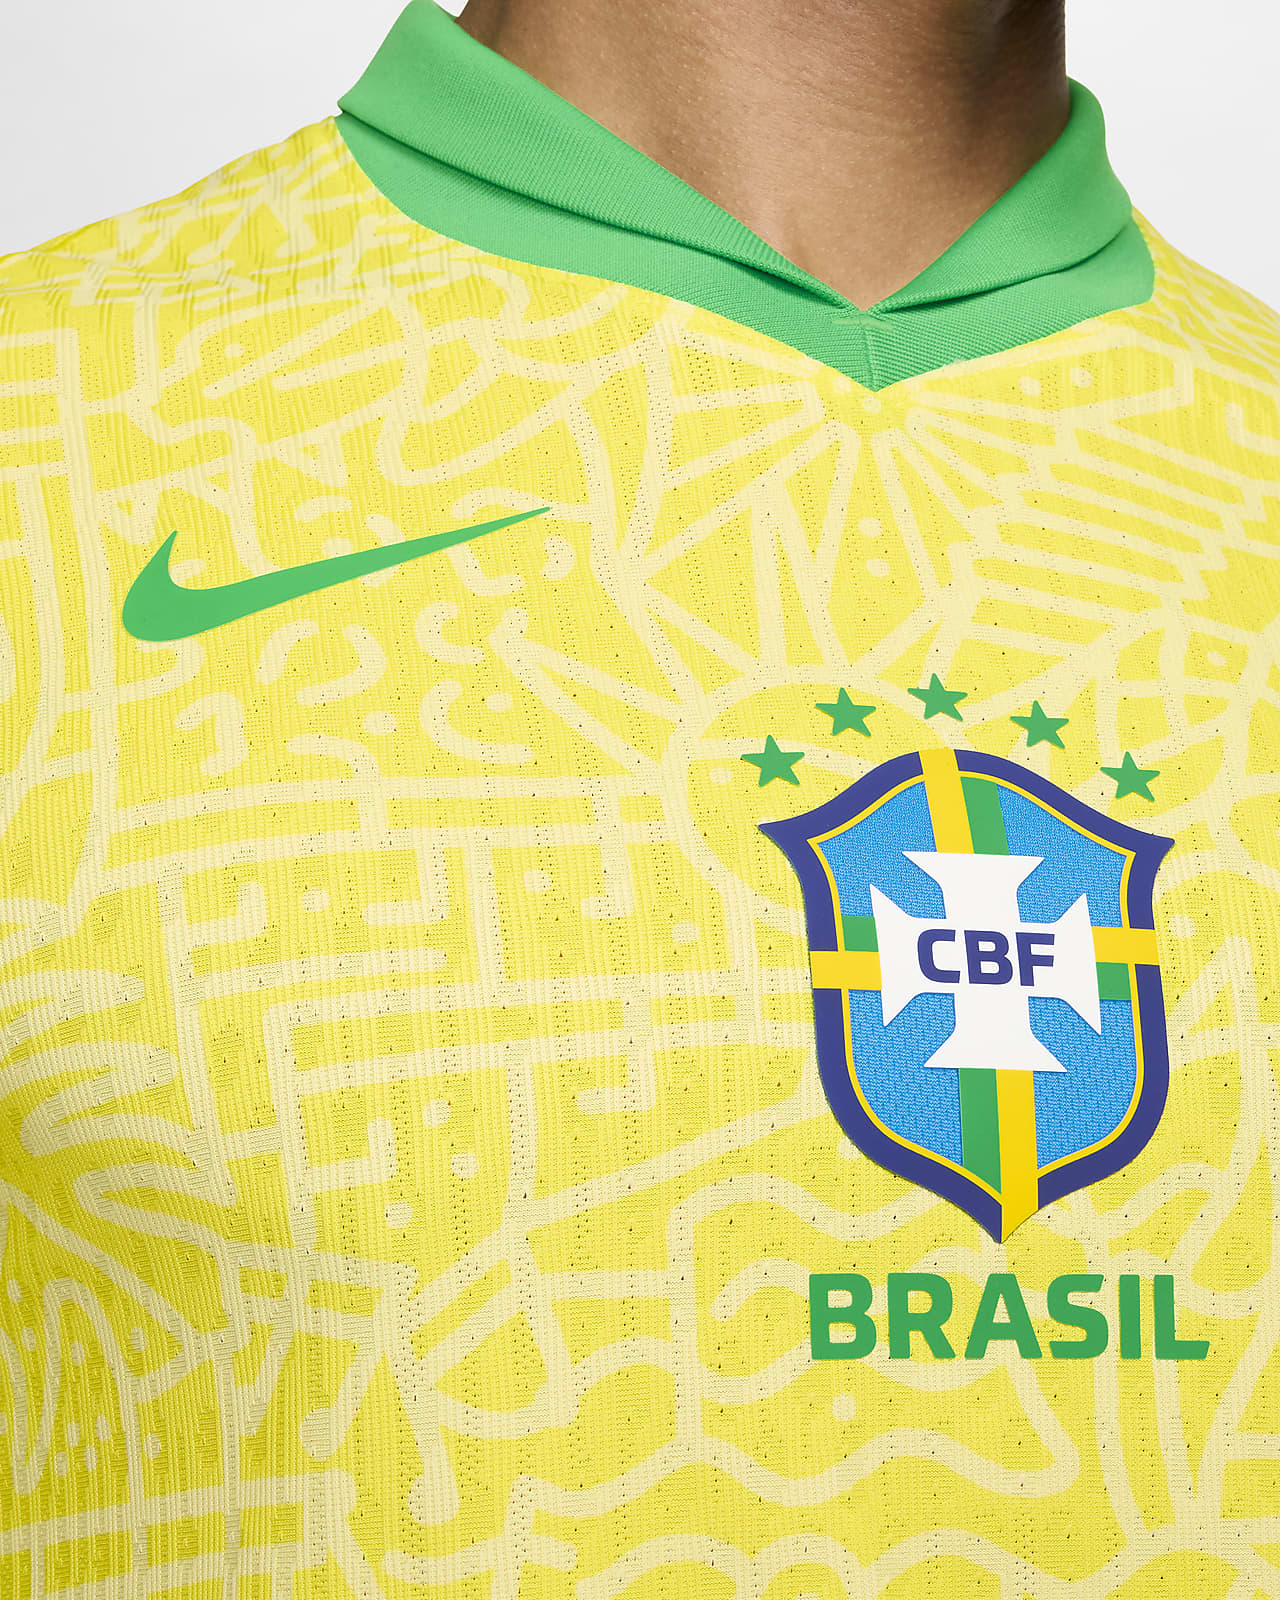 Nike Brazil CBF Warm up/Training Top/Jacket Men's Size: S Retail: $260.00